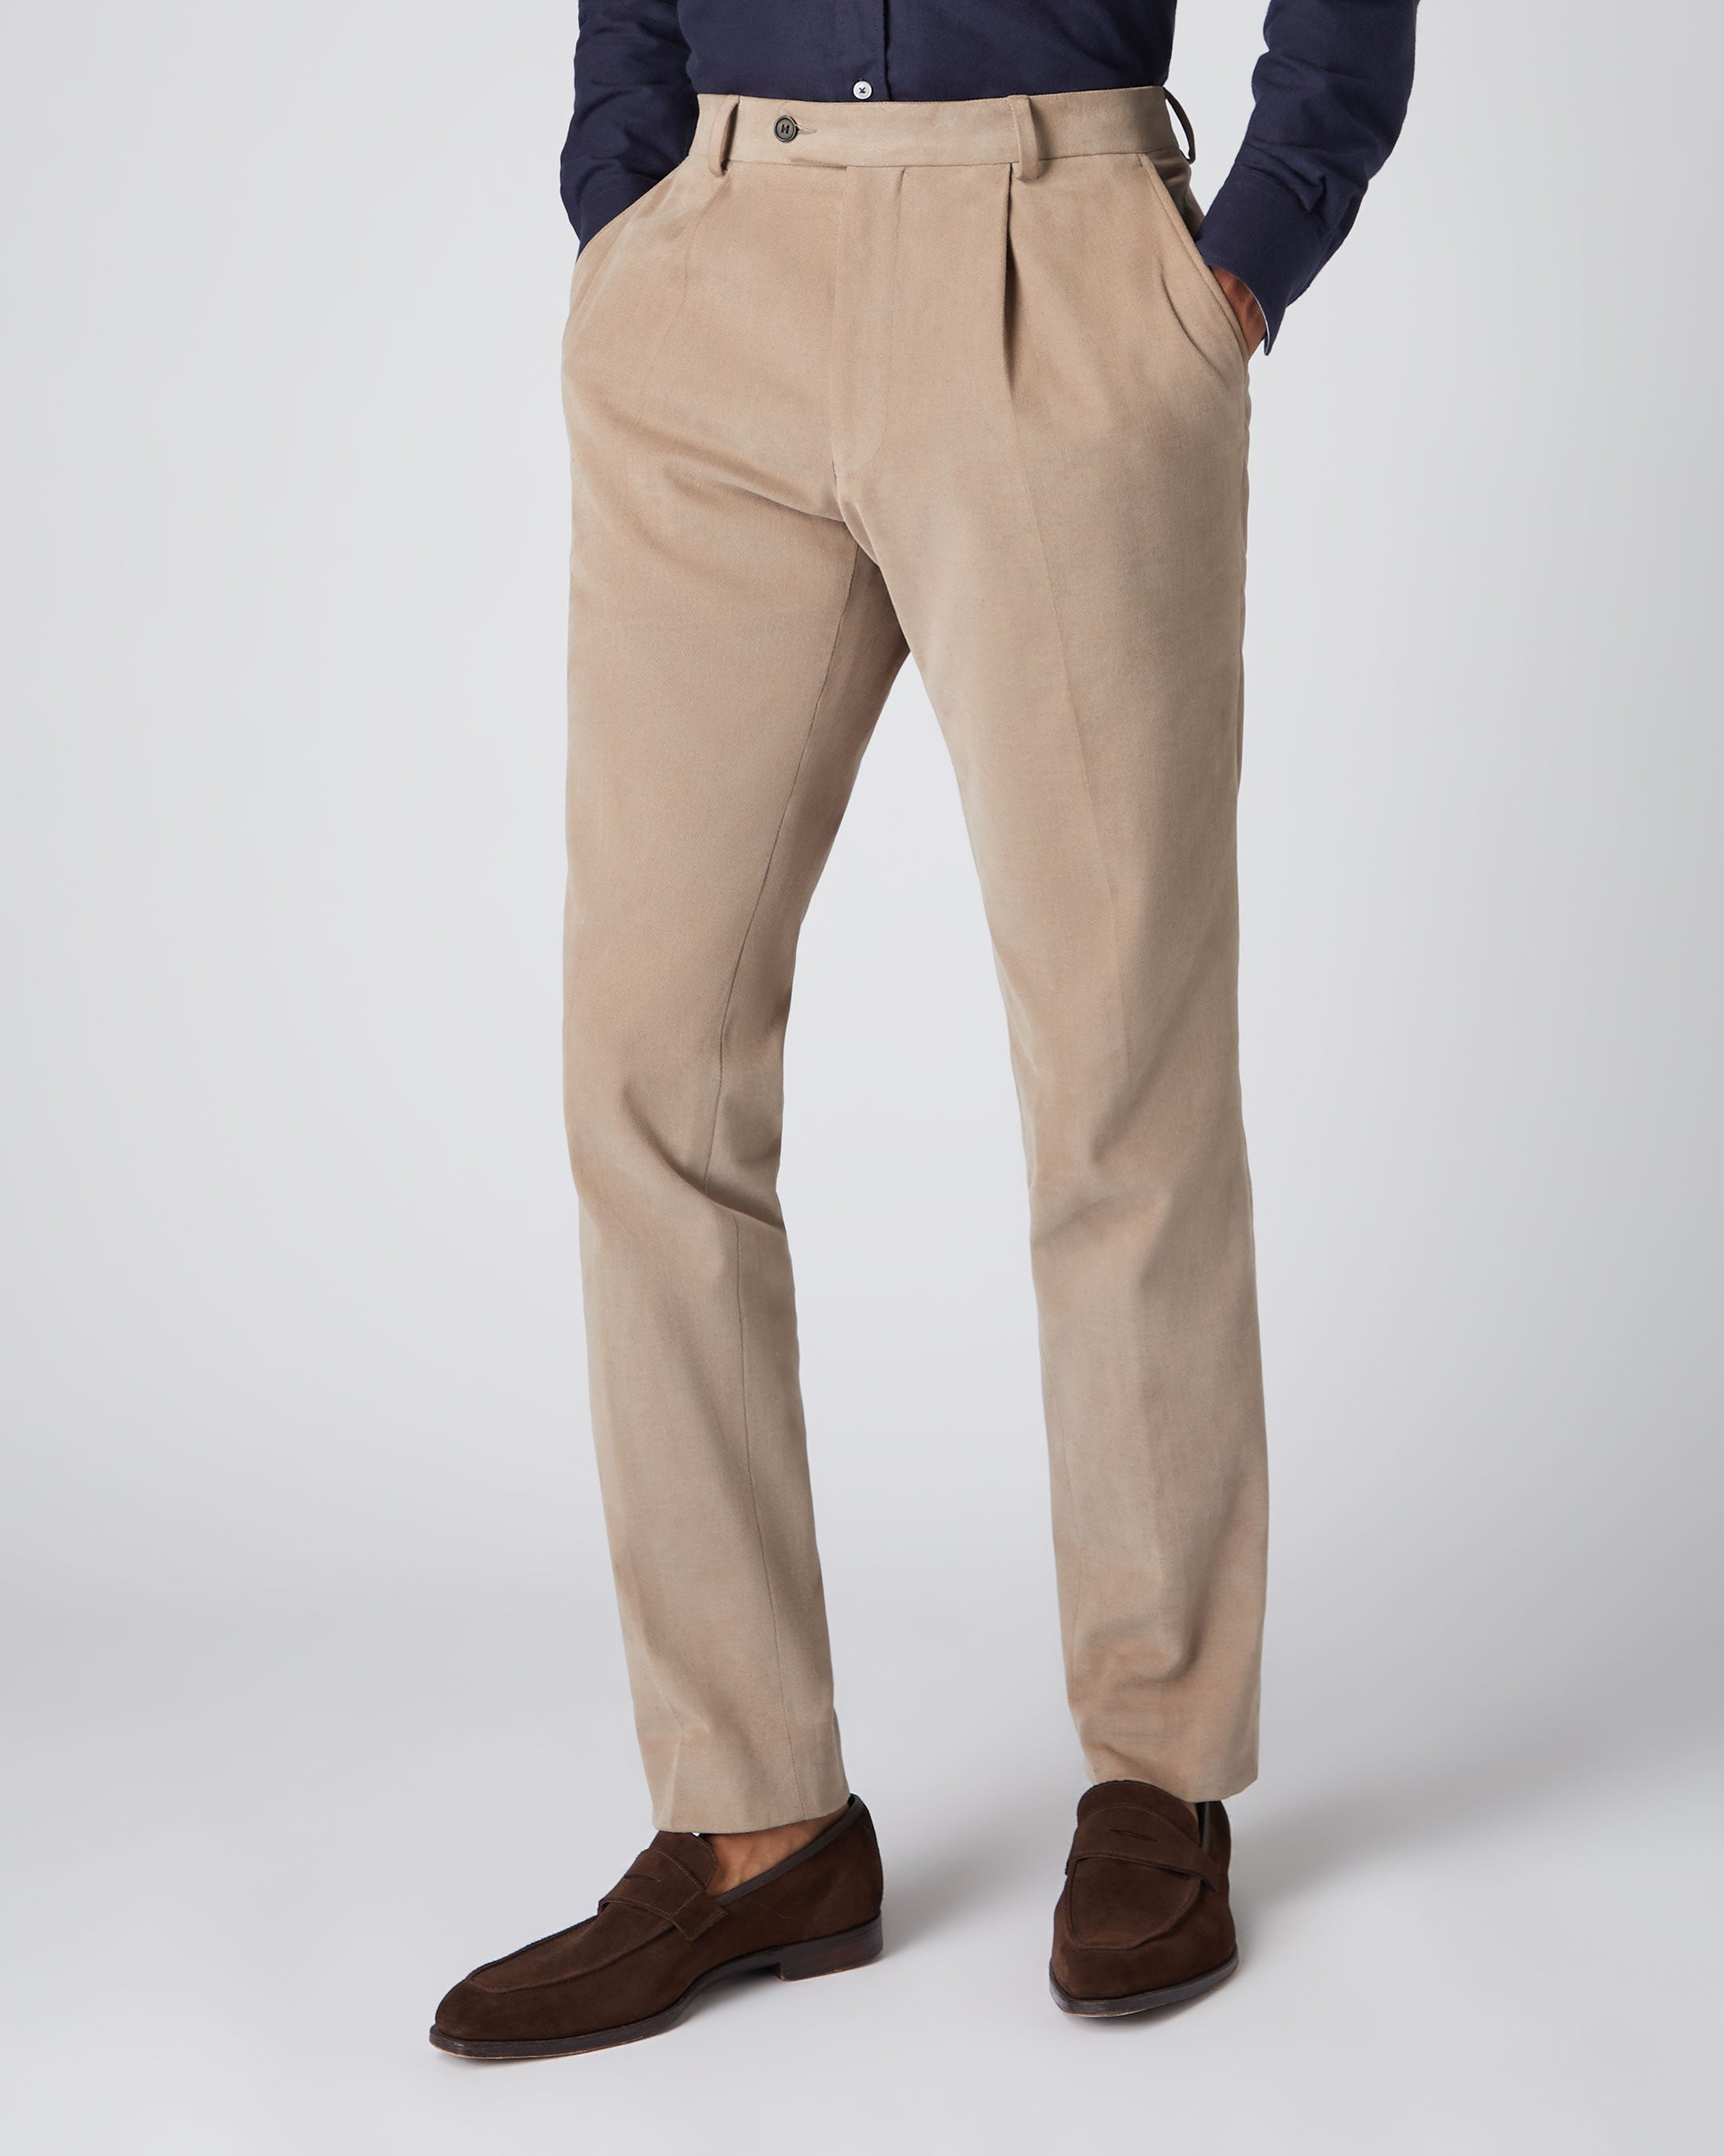 Men's sartorial trousers, classic fit, 2 pleats, linen, beige, spring summer